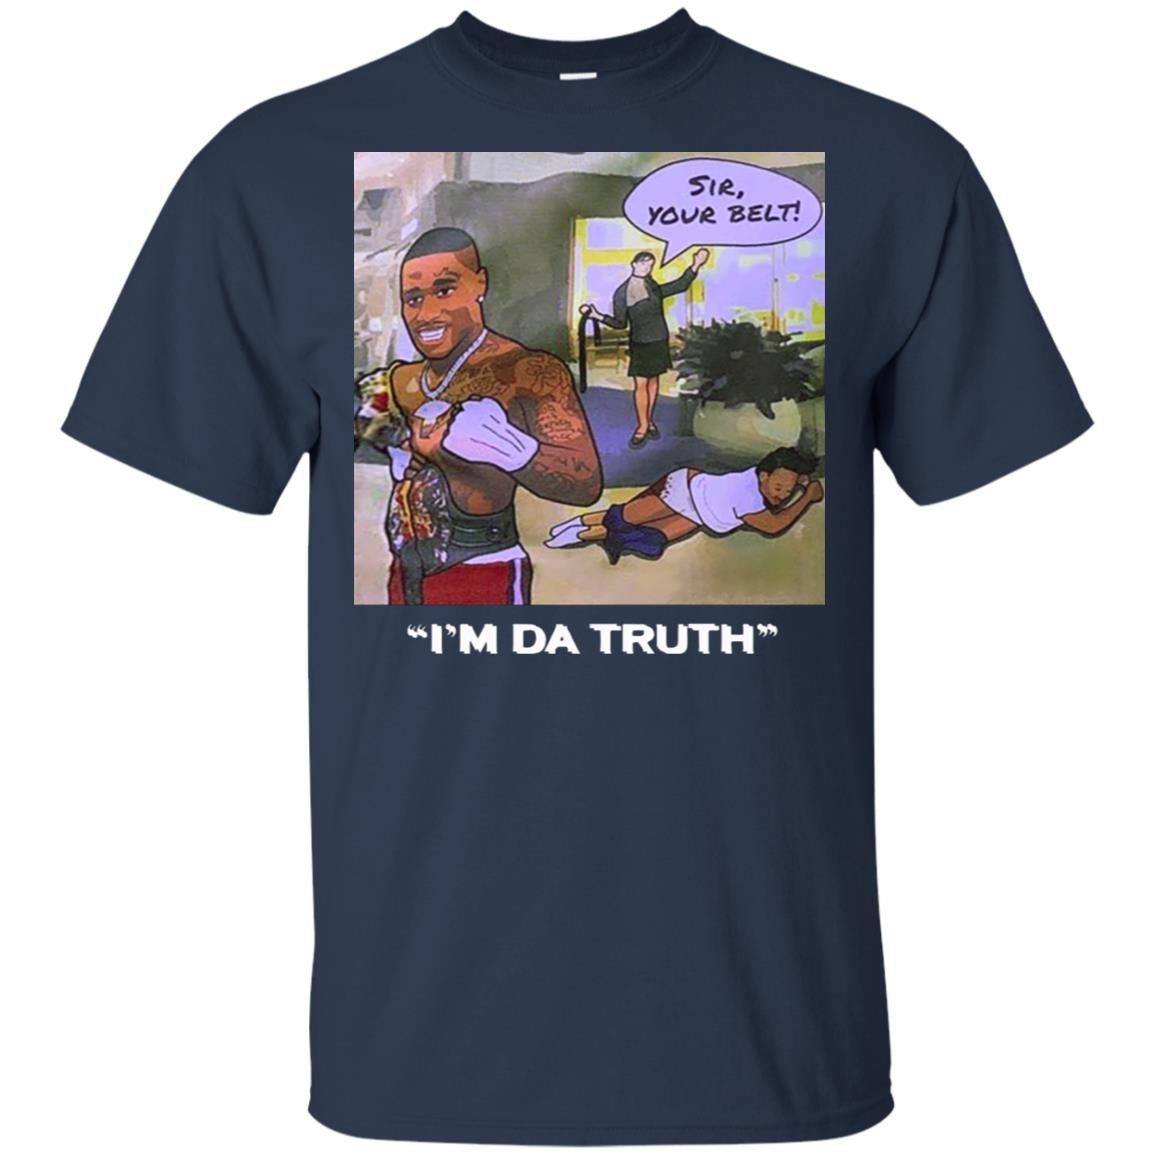 Dababy Sir your belt I’m da truth shirt Style: Gildan Ultra Cotton T-Shirt, Color: Navy